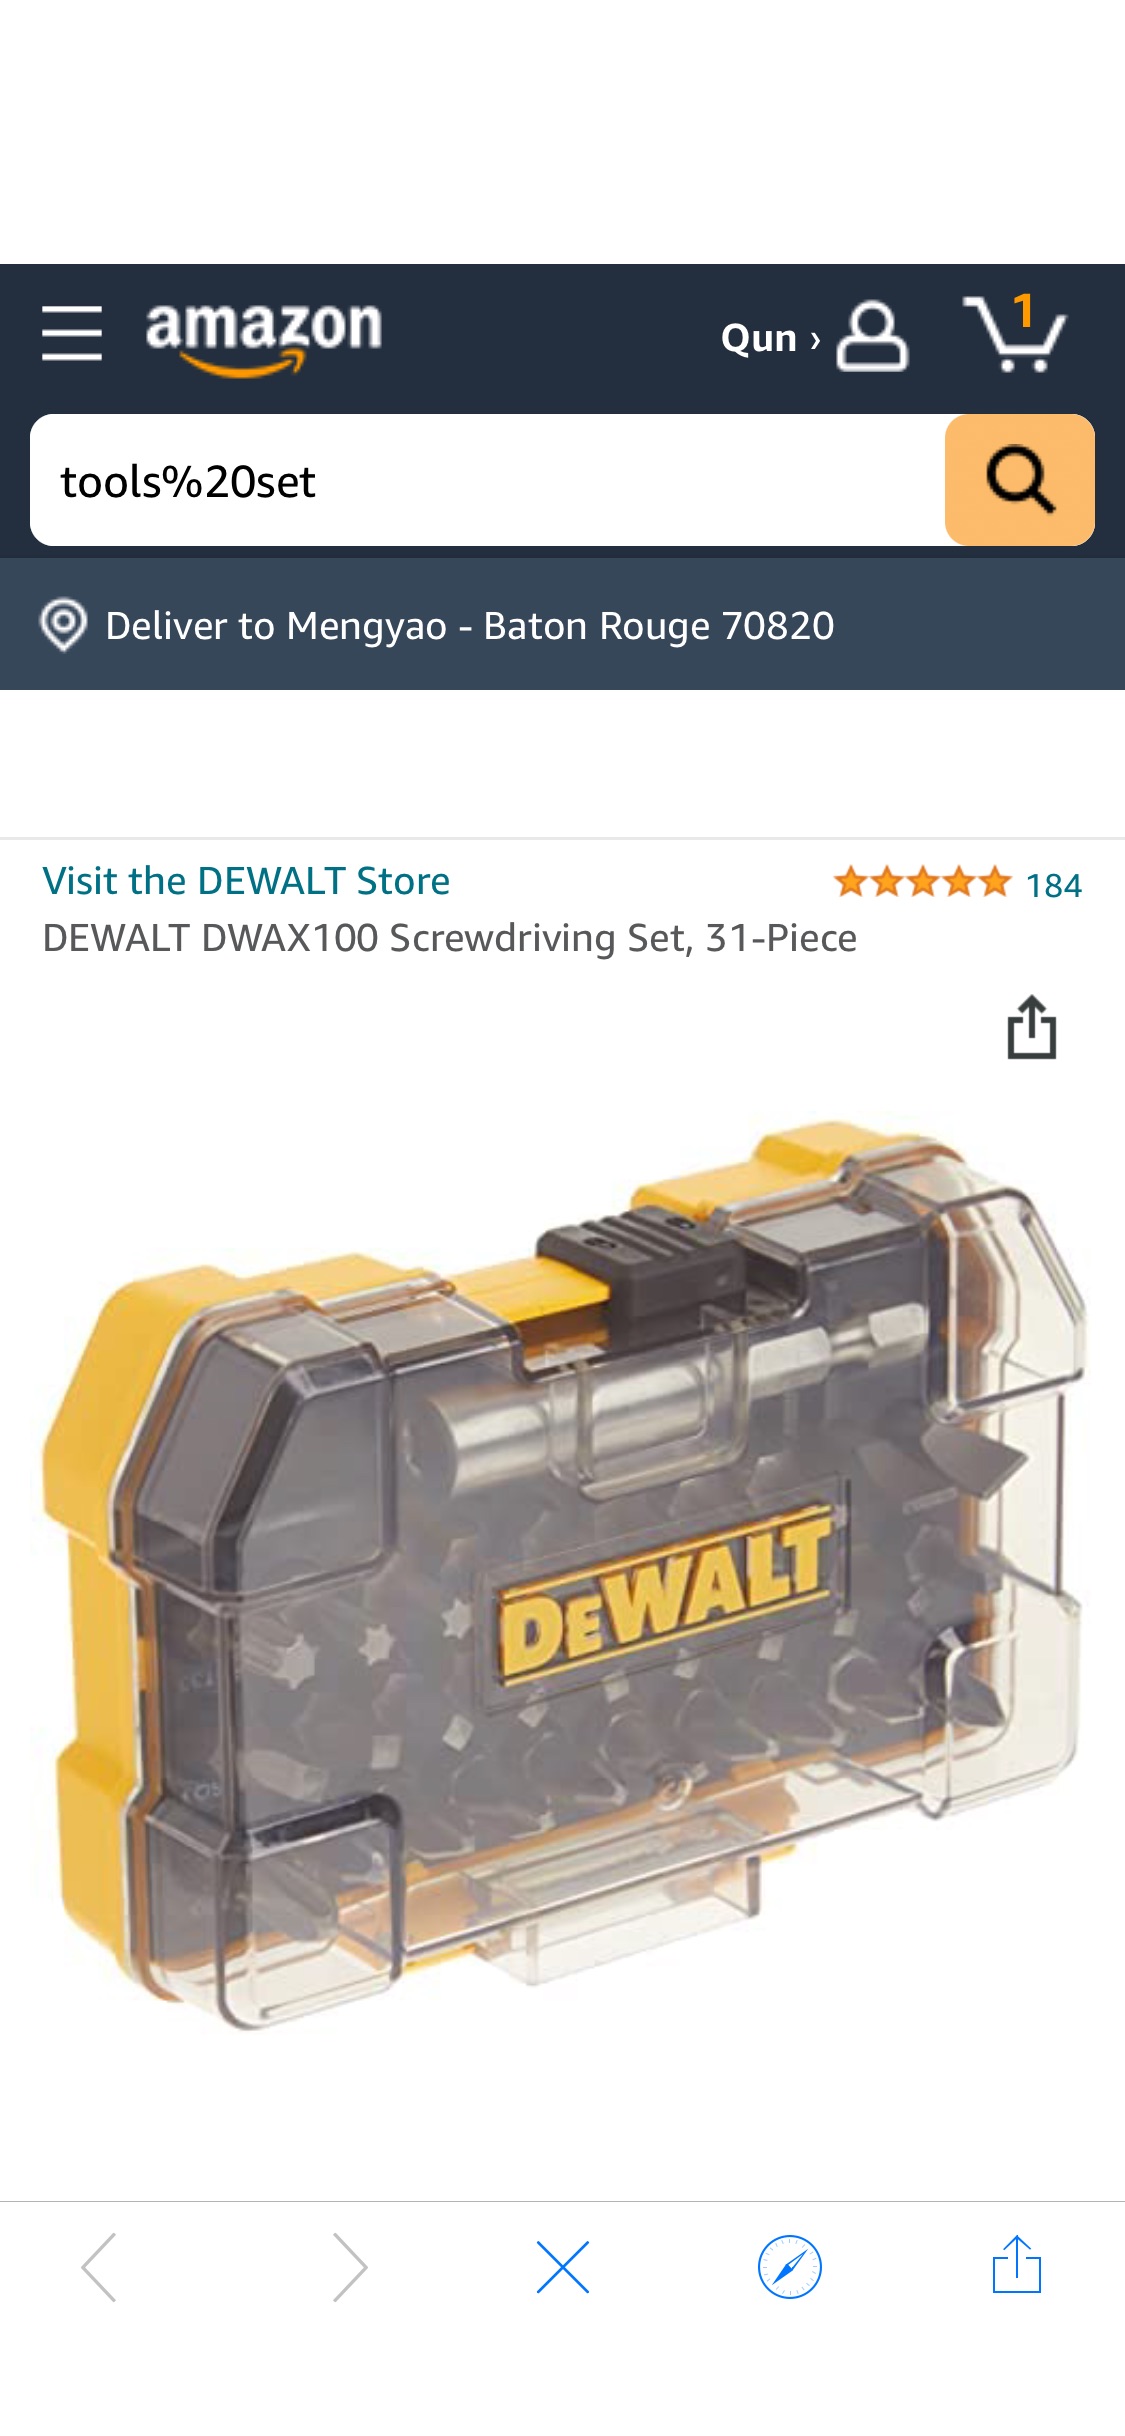 DEWALT DWAX100 Screwdriving Set, 31-Piece - - Amazon.com 工具